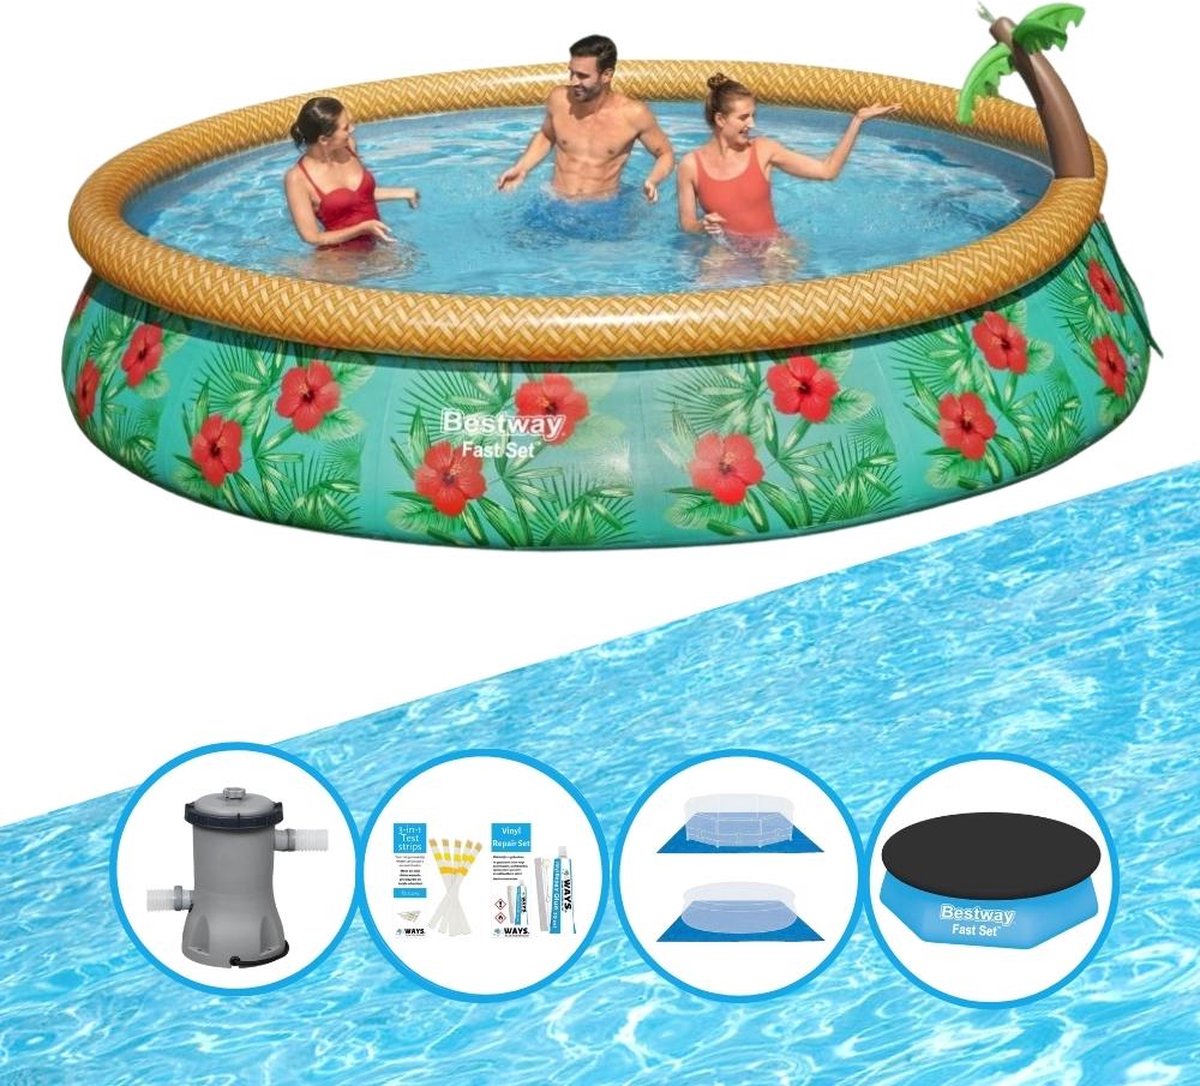 Zwembad Fast Set - 457x84 cm - Inclusief accessoires